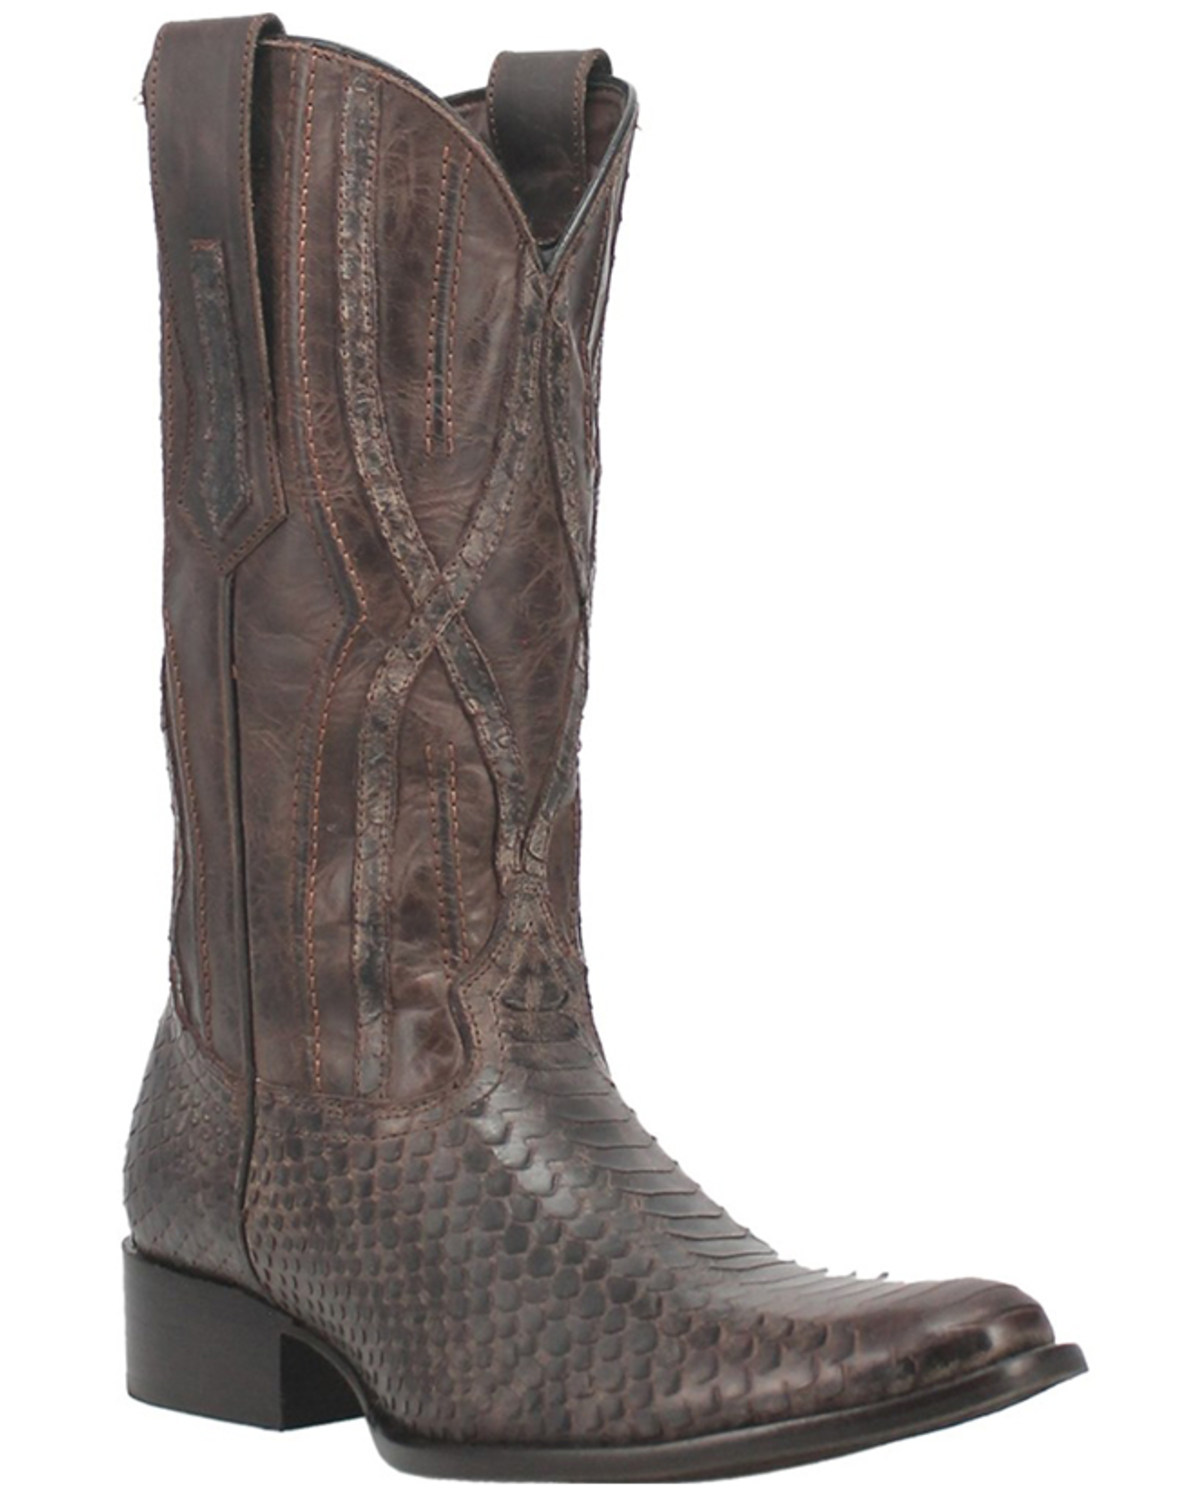 Dingo Men's Ace High Python Snake Print Leather Western Boots